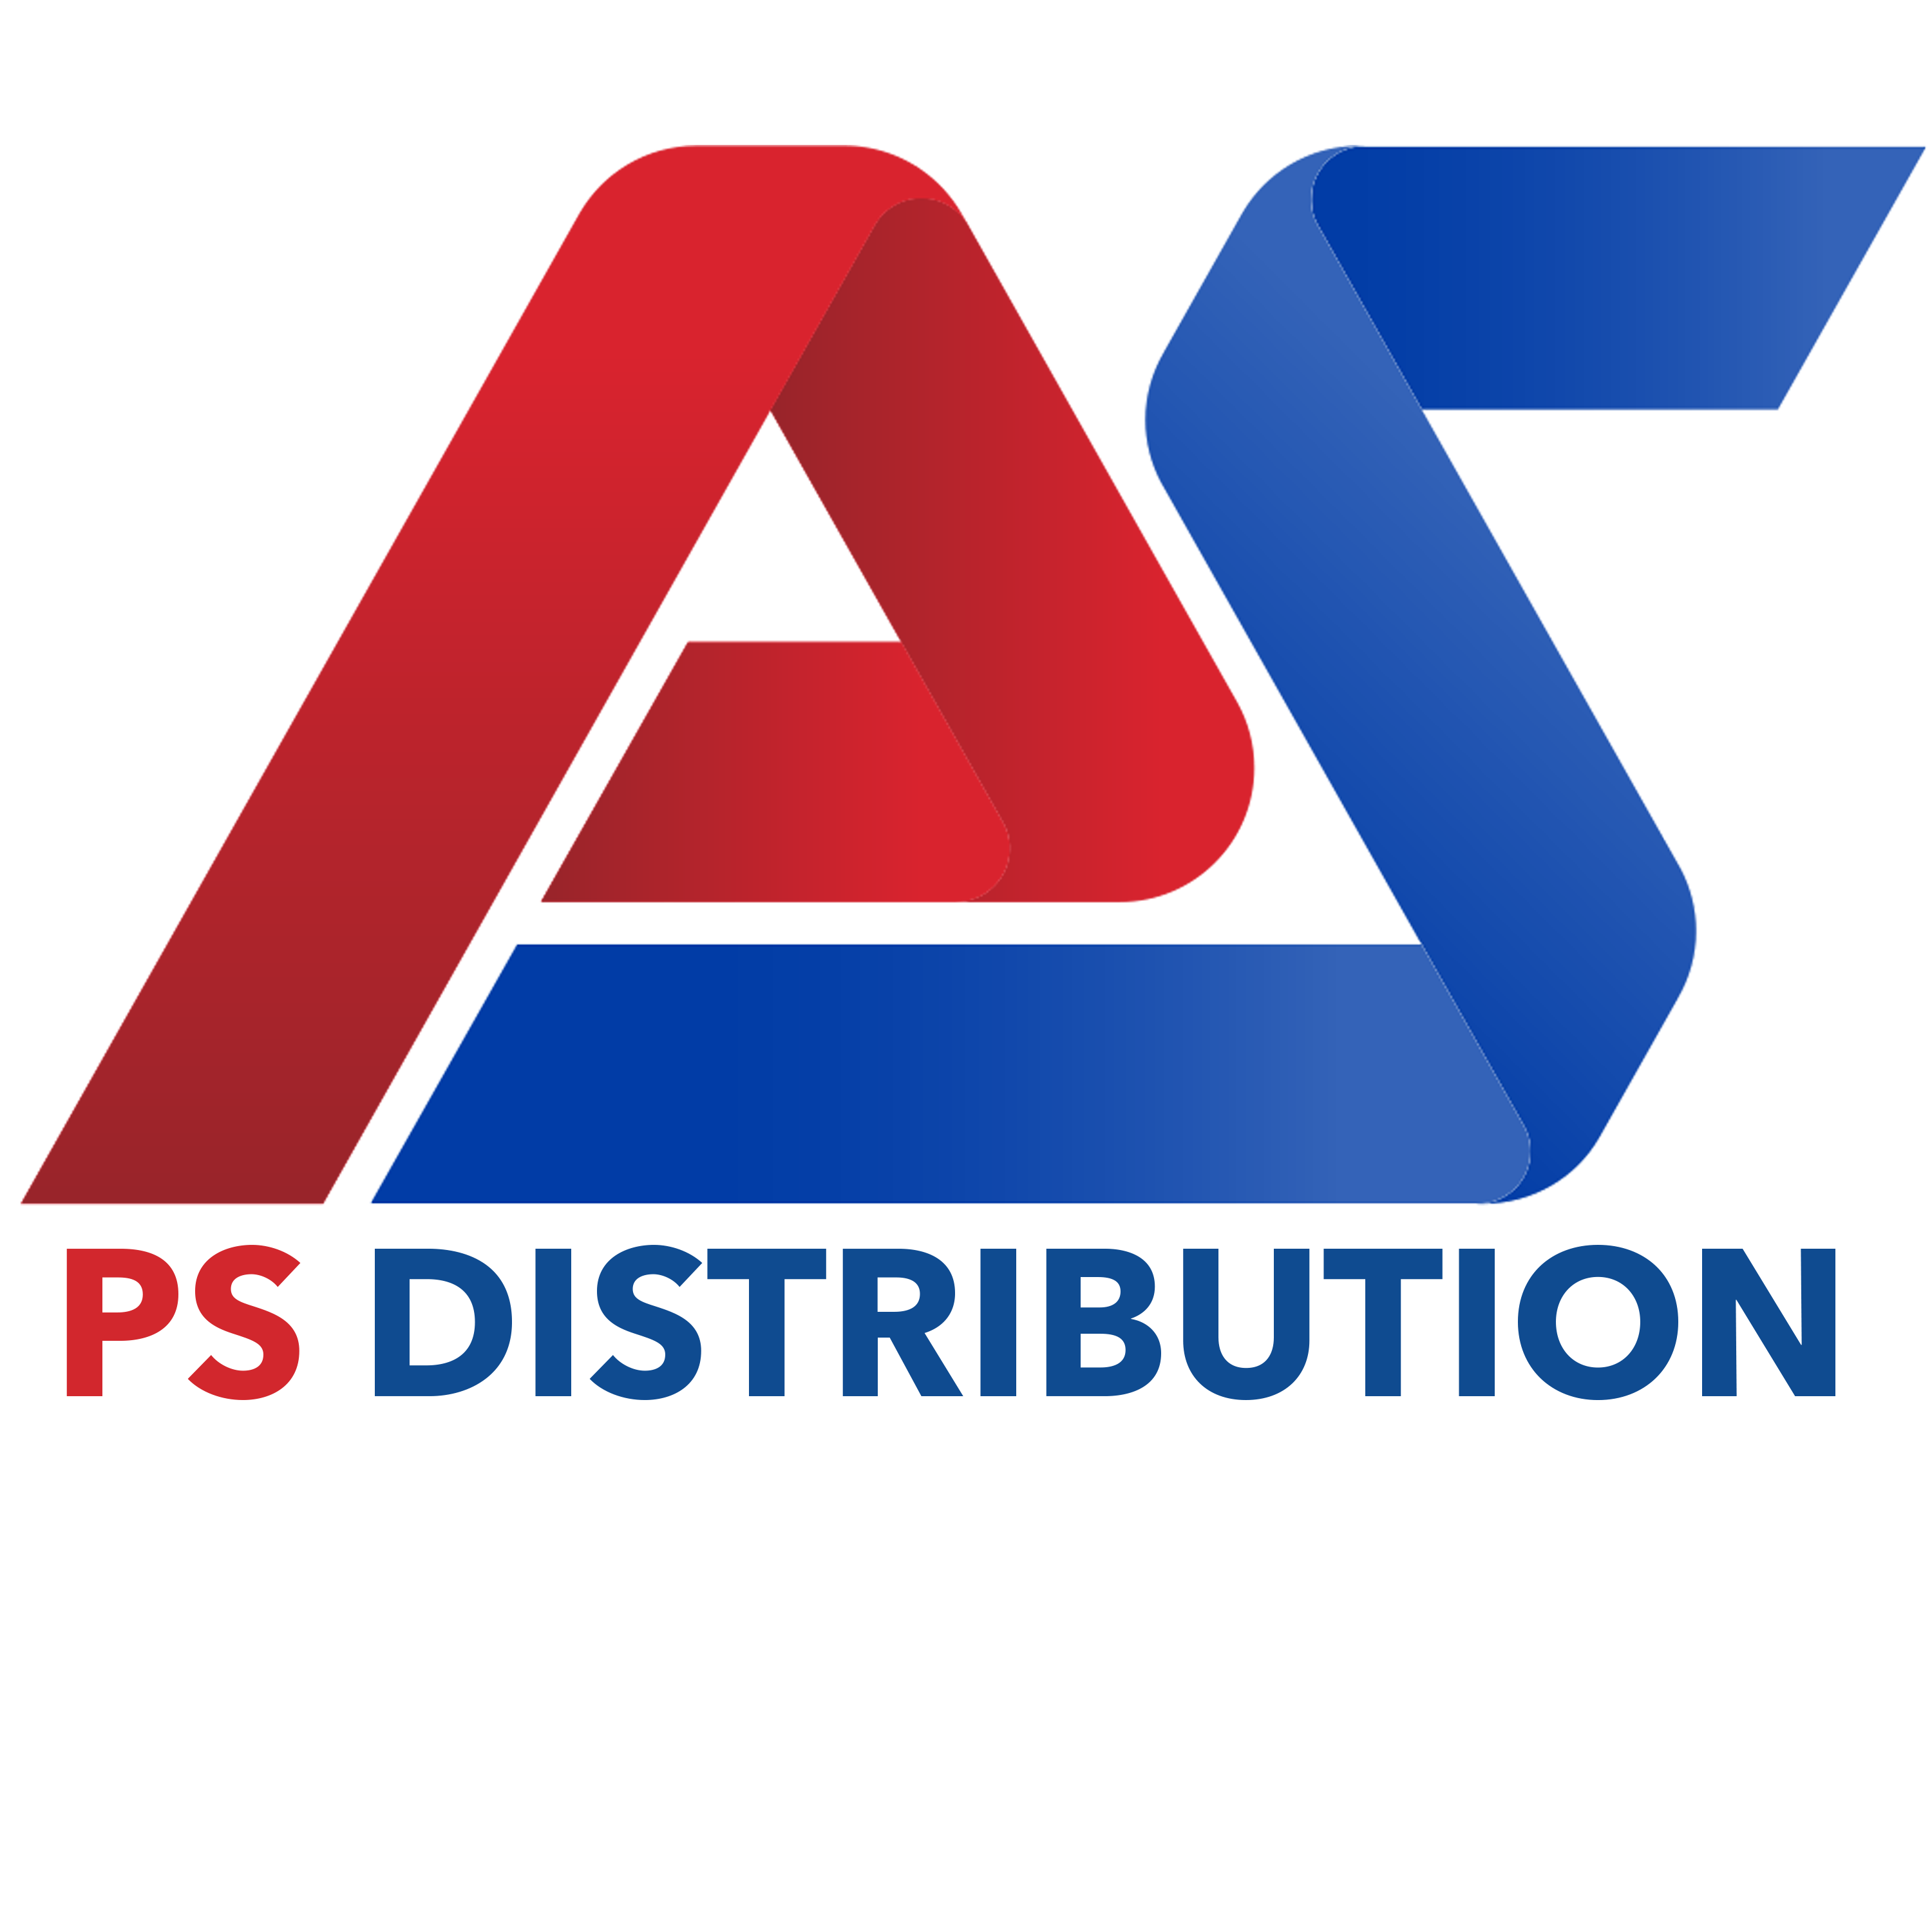 PS Distribution